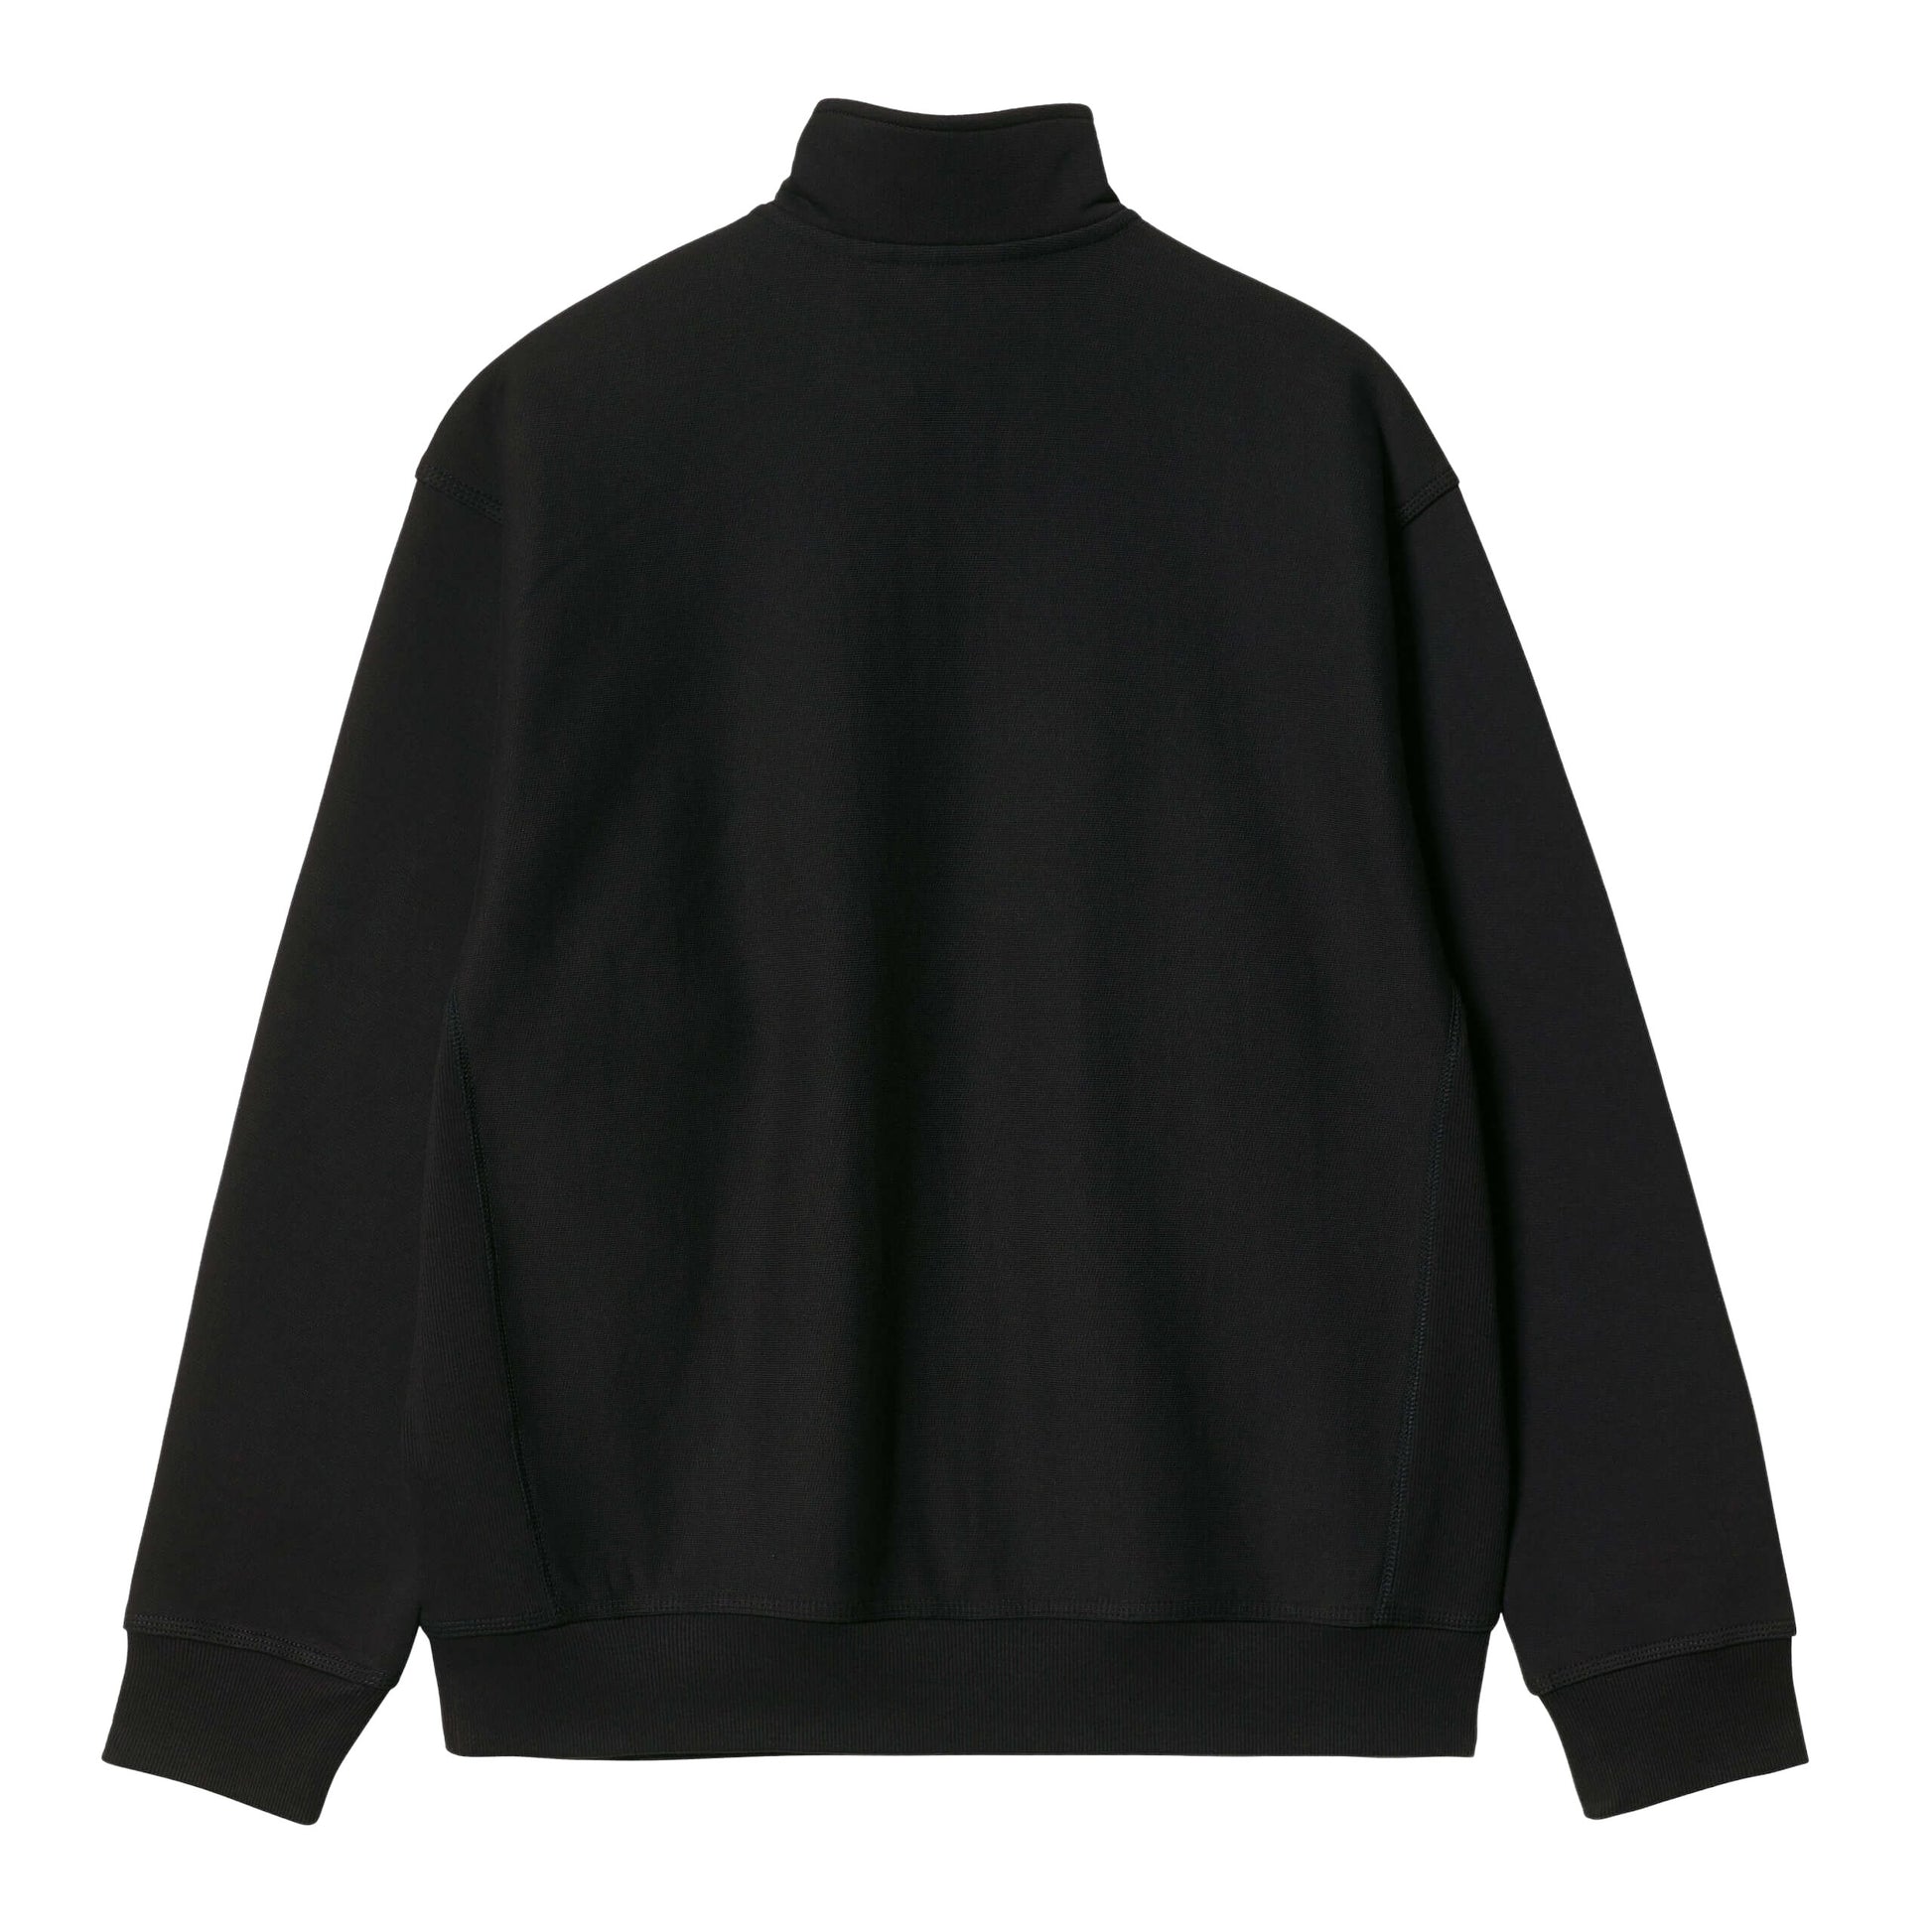 Carhartt WIP Half Zip American Script Sweatshirt-Black